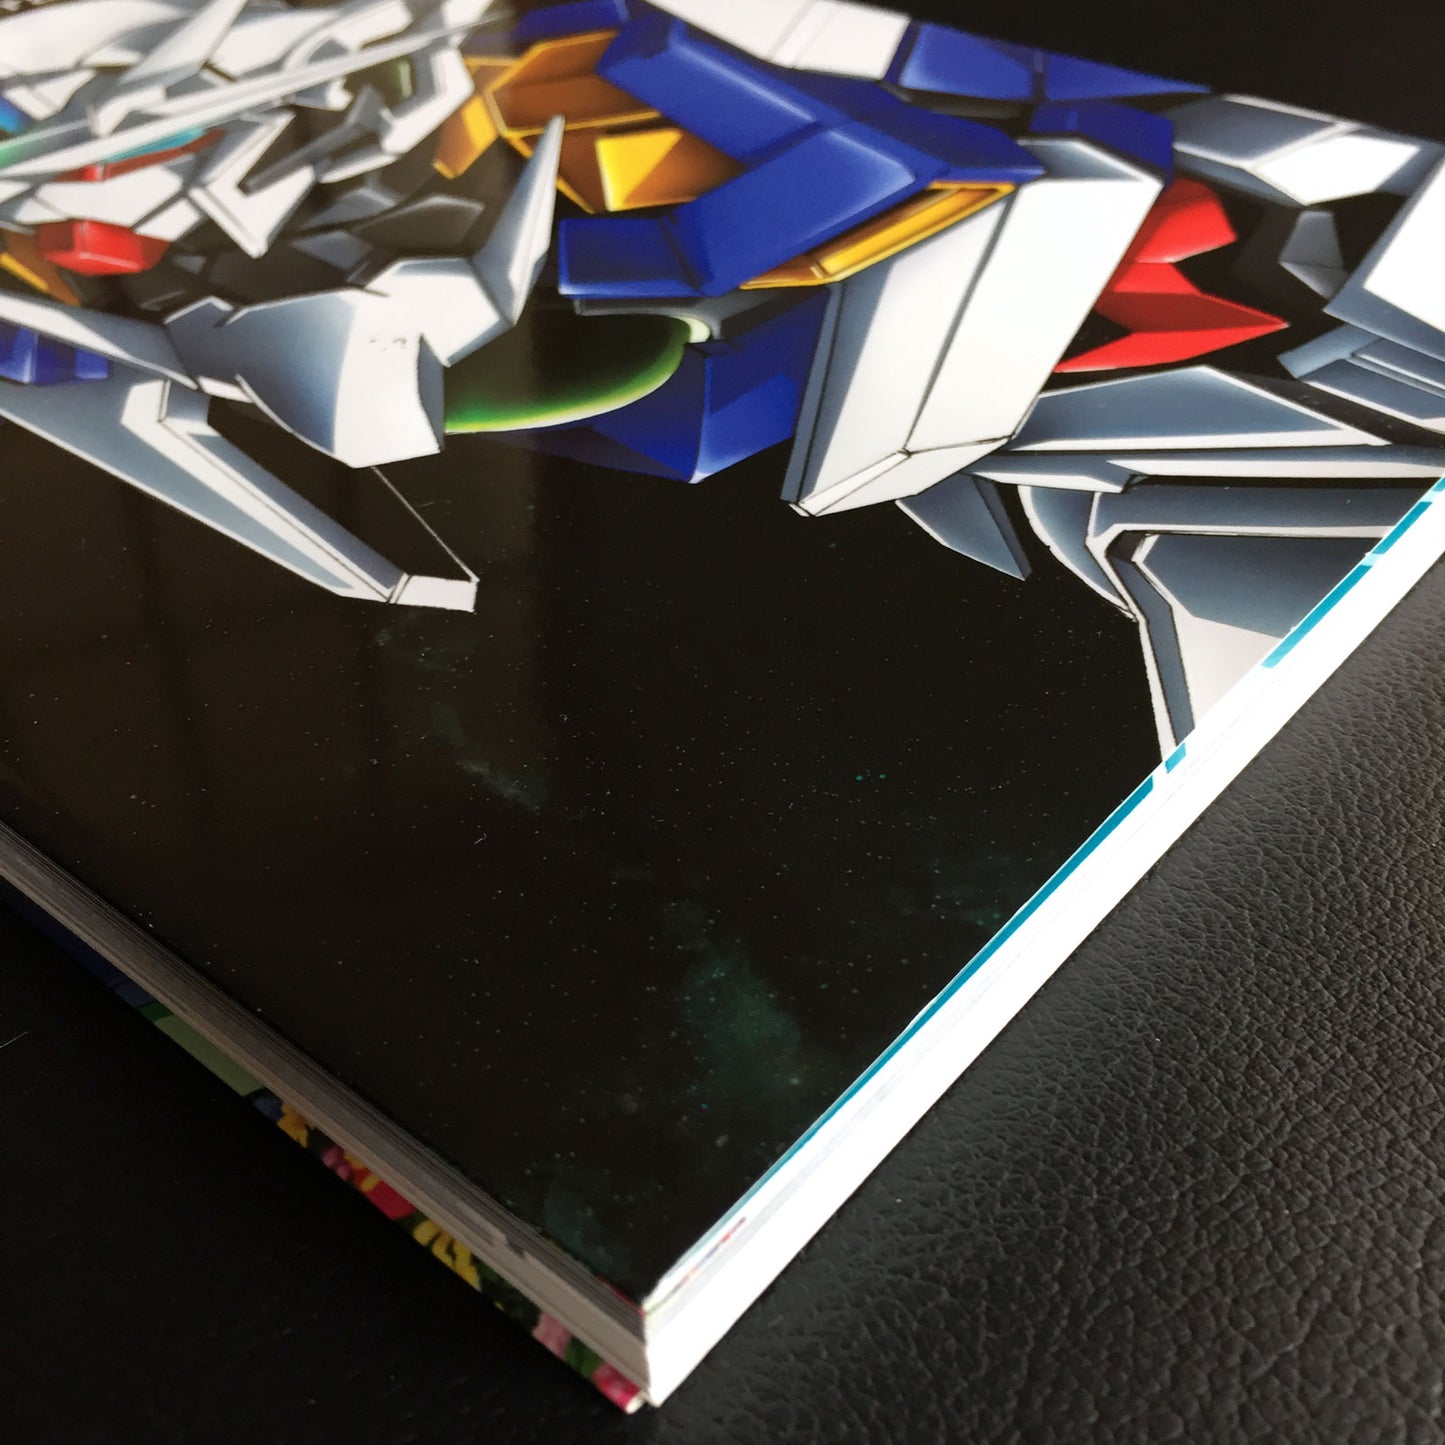 Mobile Suit Gundam 00 The Movie Awakening of the Trailblazer Official Guide Book